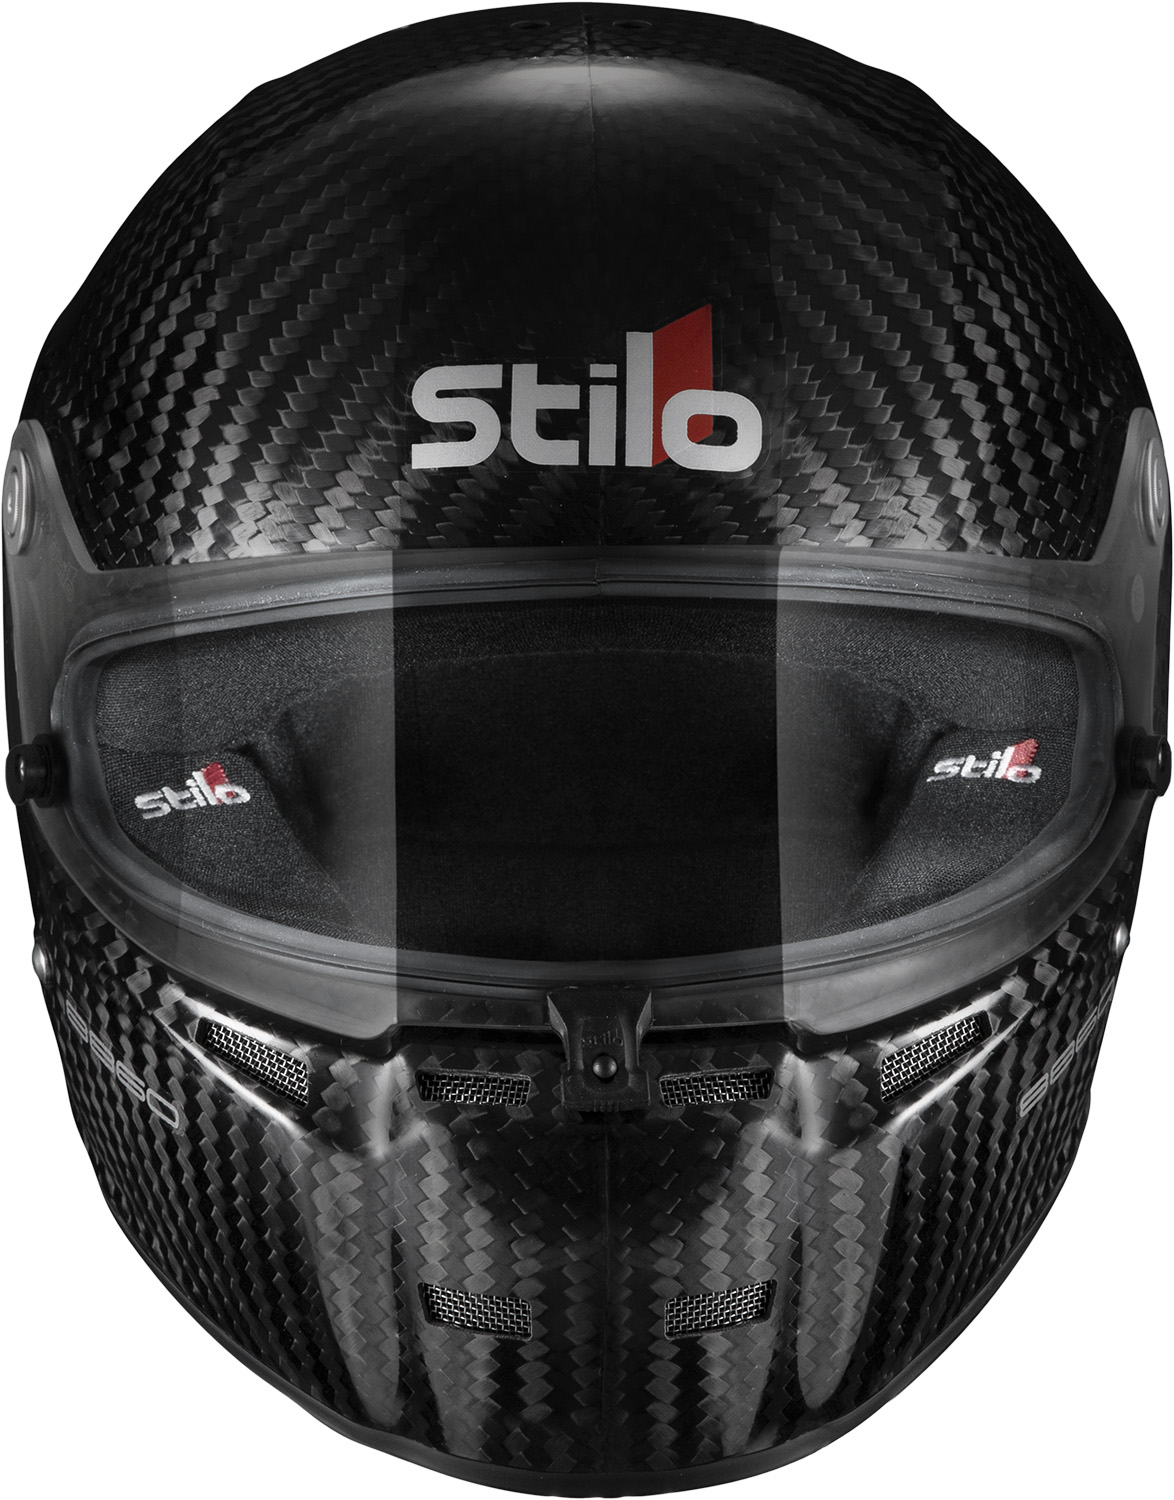 Stilo Helm ST5F N Carbon 8860